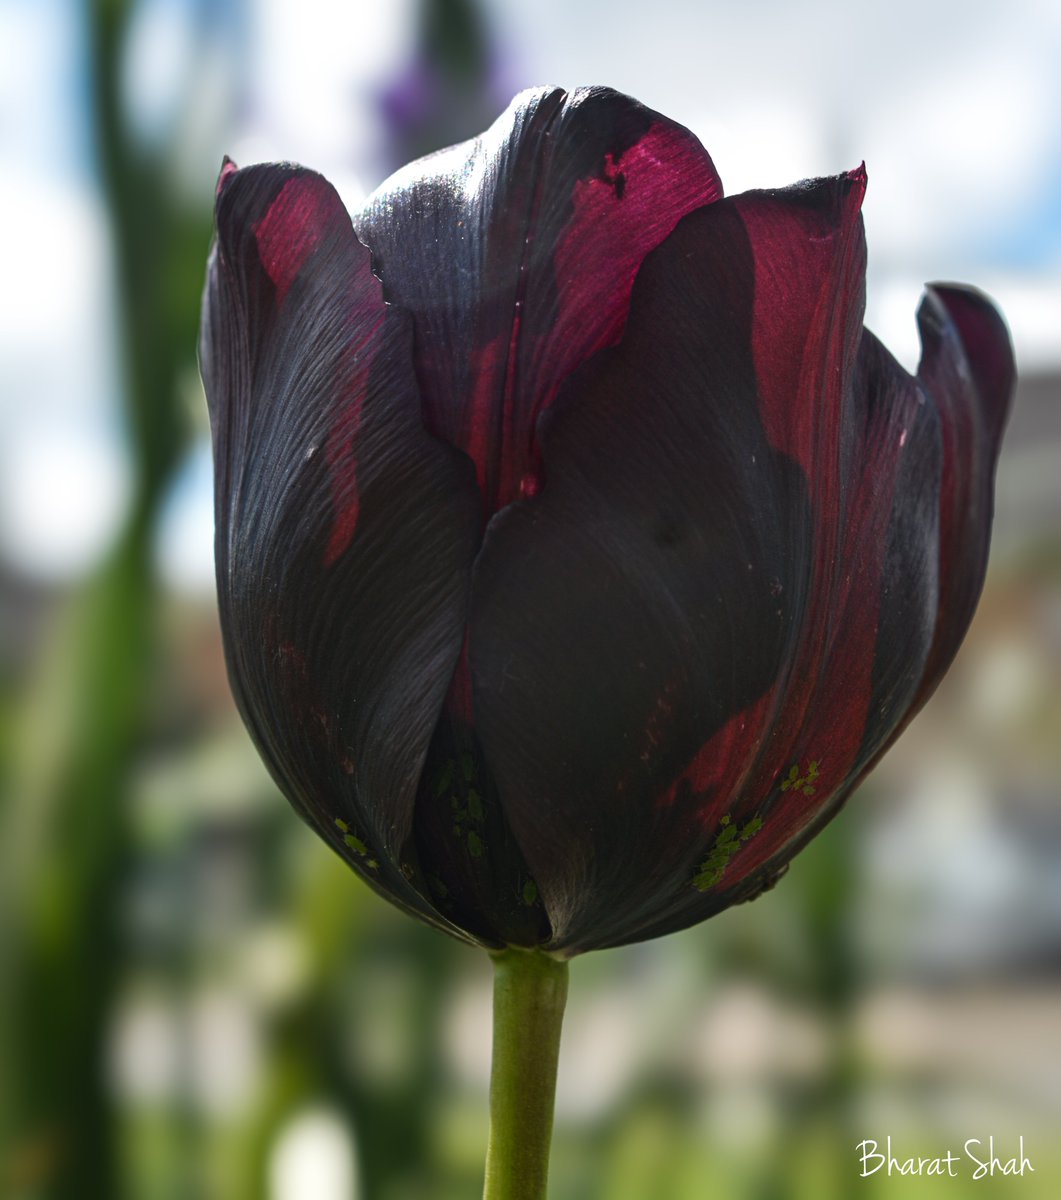 'Red wine' tulip in my driveway. 

#scenesfrommk #ThePhotoHour 
#MacroHour